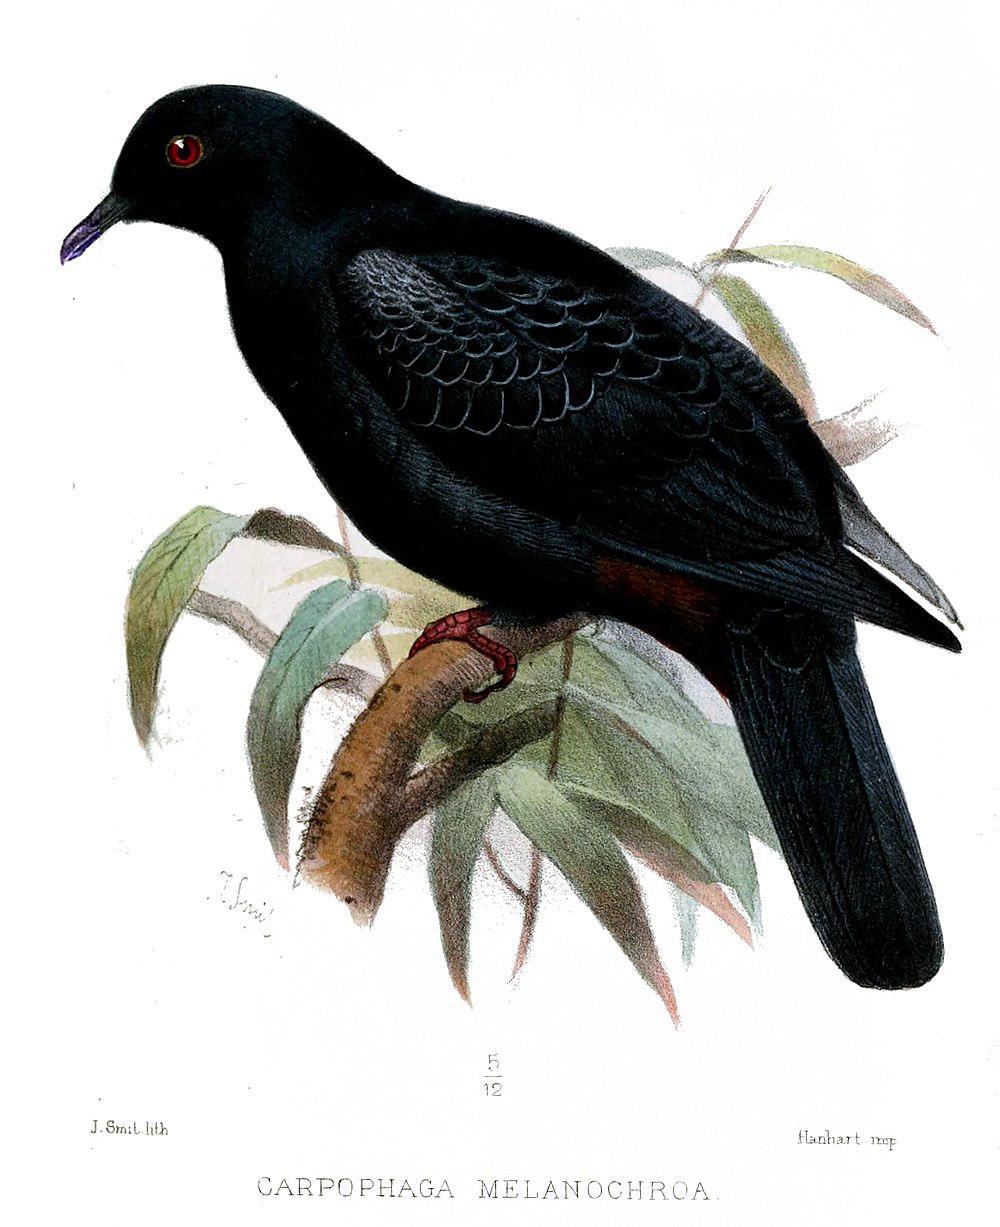 黑皇鸠 / Black Imperial Pigeon / Ducula melanochroa